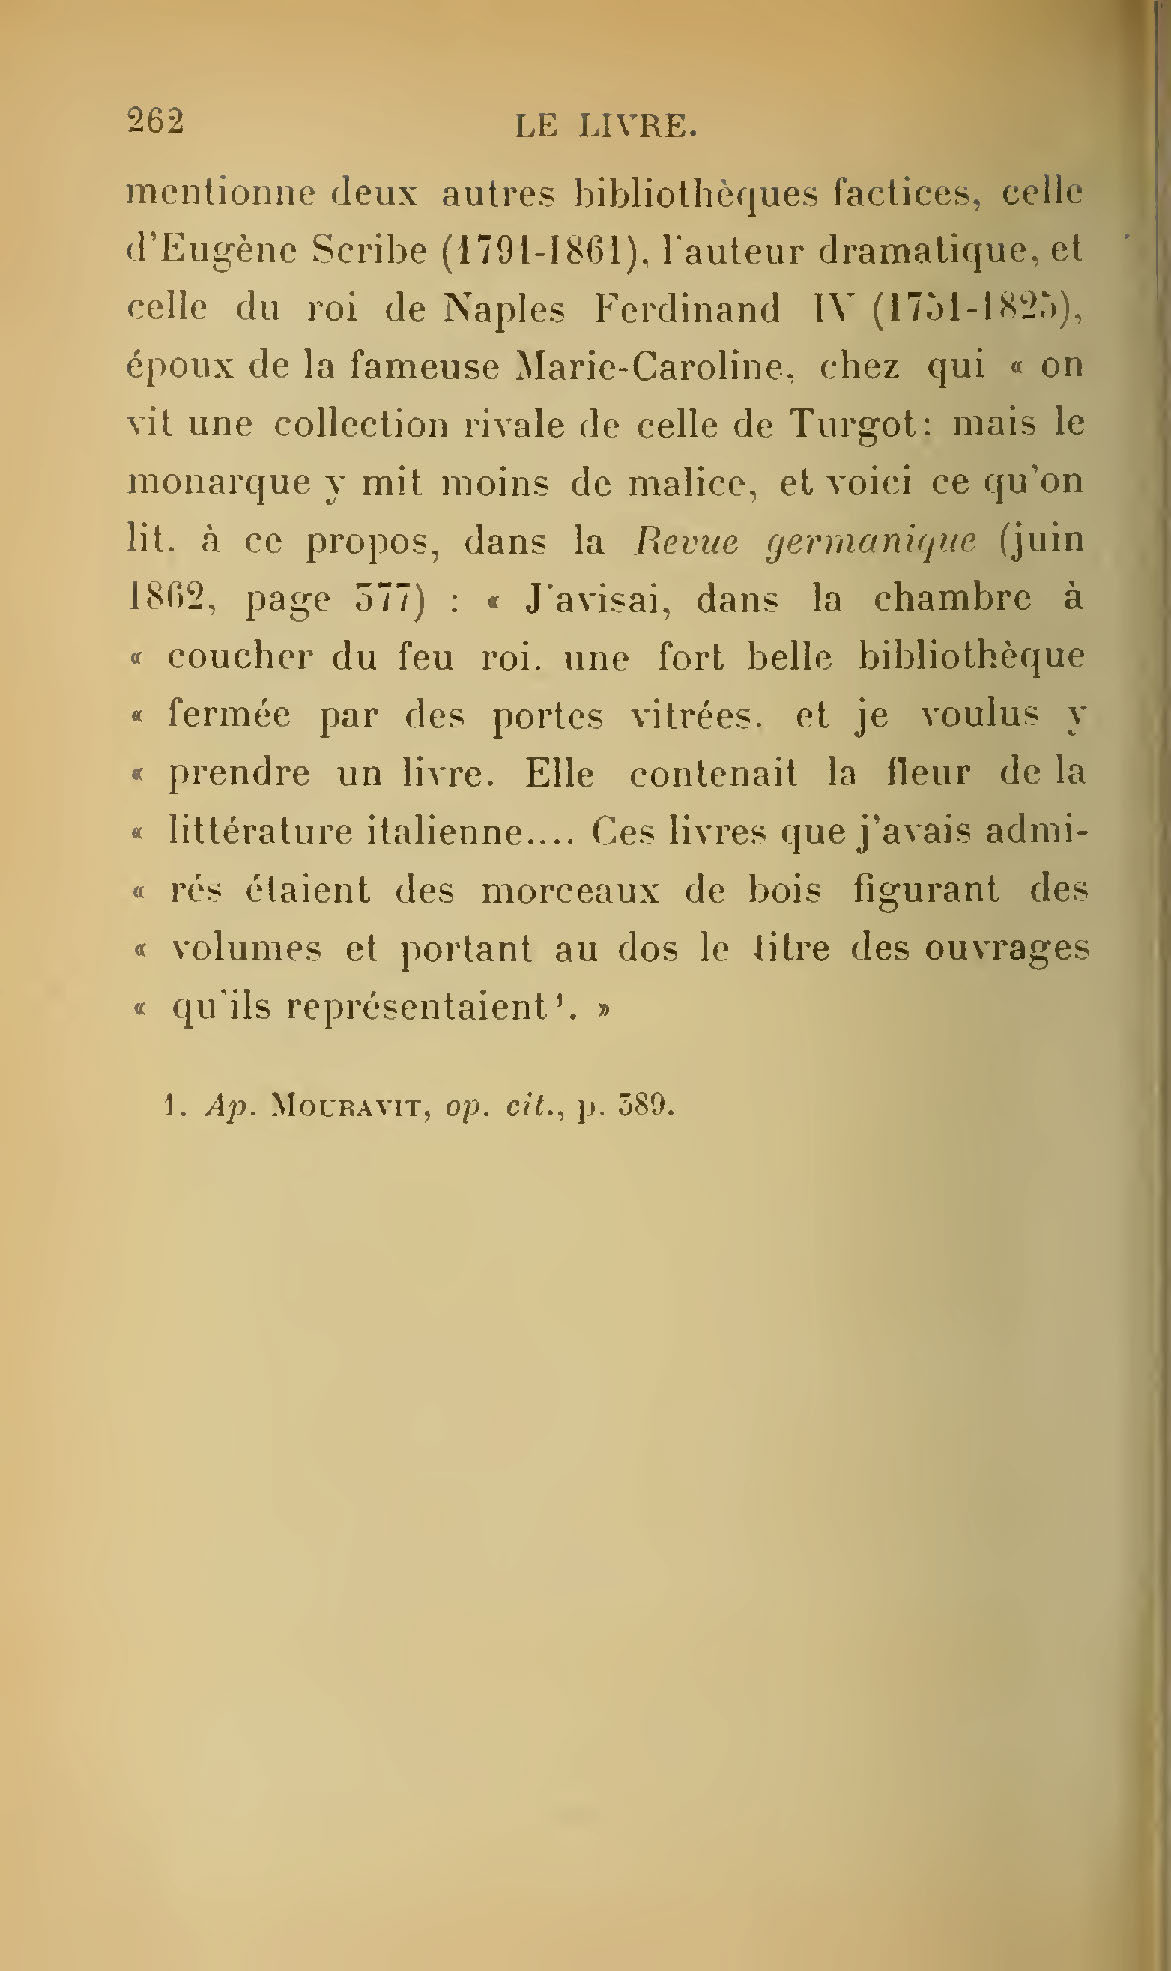 Albert Cim, Le Livre, t. II, p. 262.